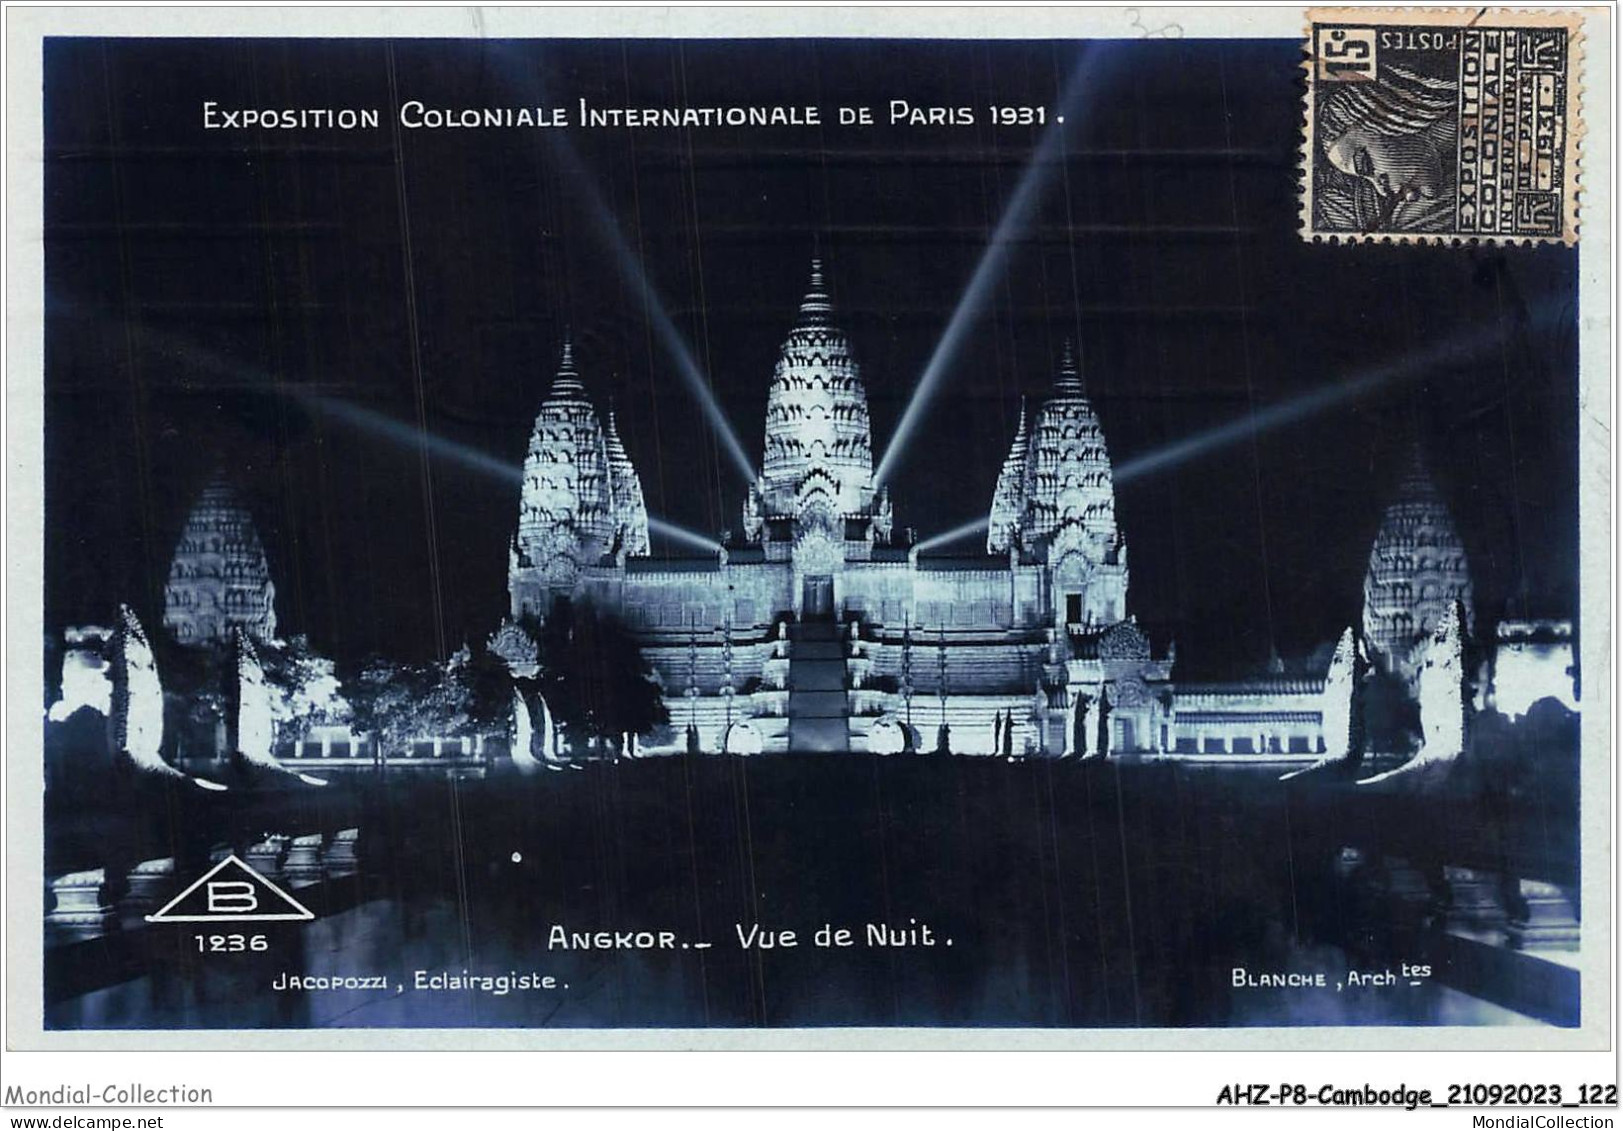 AHZP8-CAMBODGE-0744 - EXPOSITION COLONIALE INTERNATIONALE - PARIS 1931 - ANGKOR - VUE DE NUIT - Cambodge